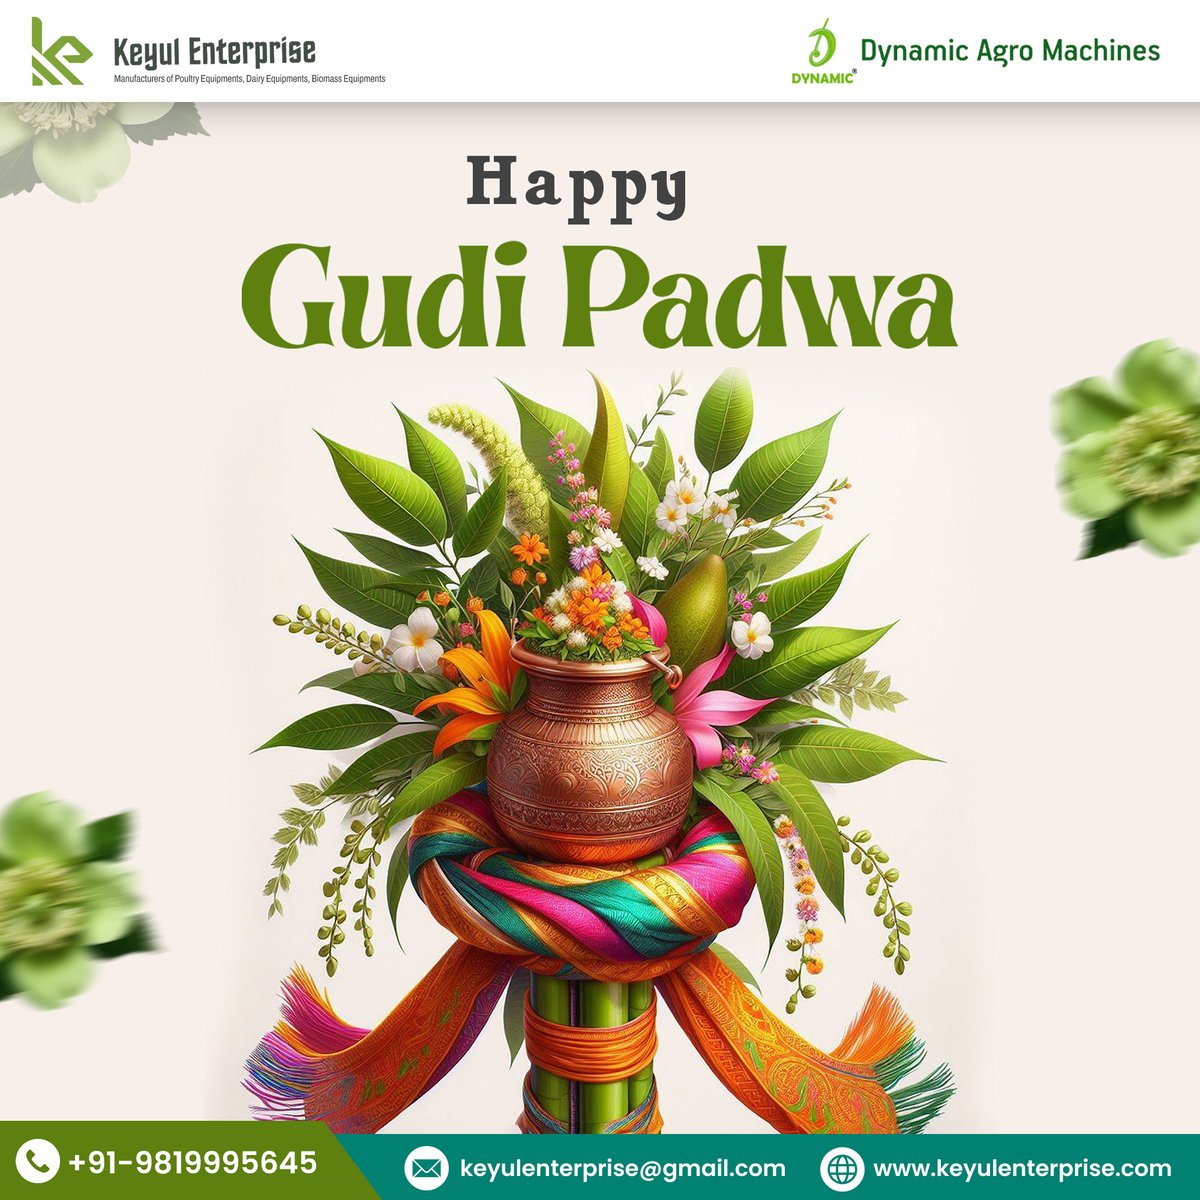 Let this New Year bring good health, wealth, and prosperity in all our lives. Happy Gudi Padwa🚩💖

#HappyGudiPadwa #gudipadwa #gudipadwaspecial #maharashtra #HinduNewYear #HappyNewYear #GudiPadwaCelebration #NewBeginnings2024 #ProsperityAndJoy #MarathiNewYearMagic